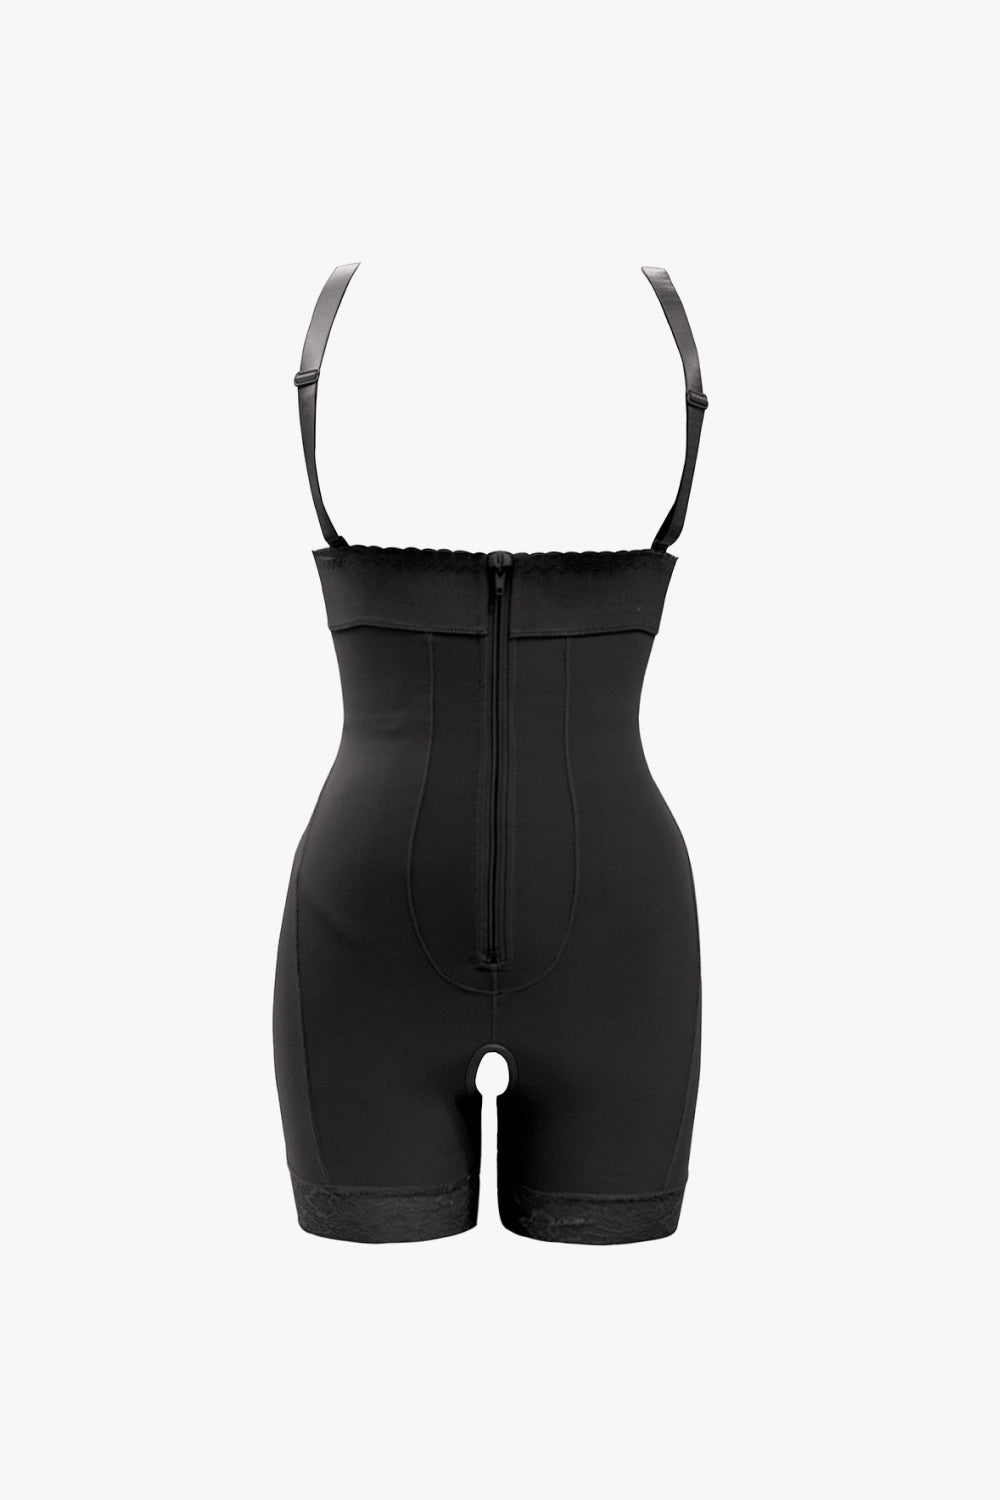 Full Size Zip Up Under-Bust Shaping Bodysuit - BloomBliss.com